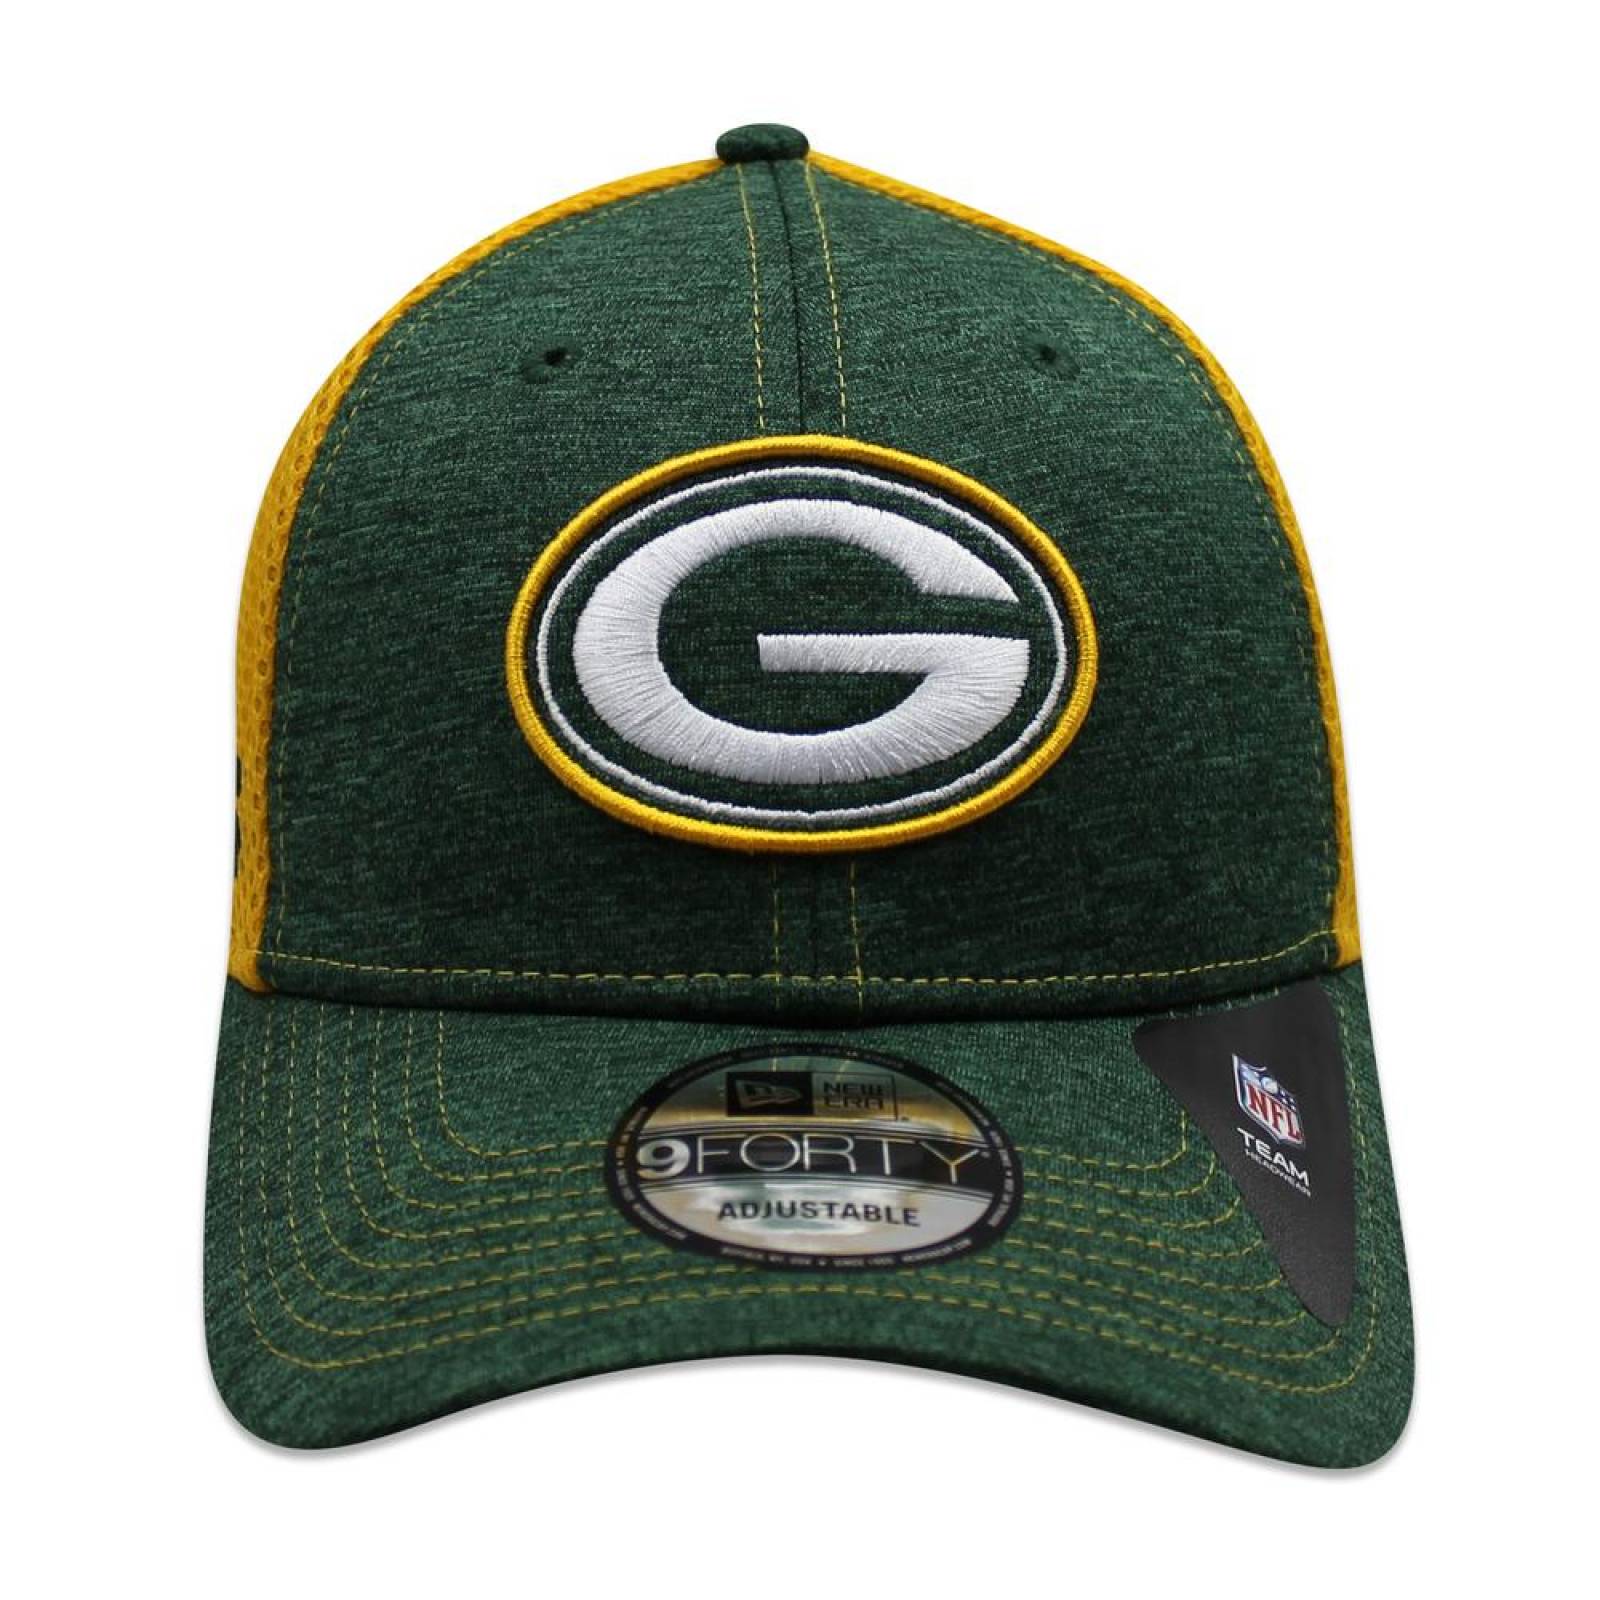 Gorra New Era 9 Forty NFL Packers Surge Stitcher Verde Unitalla 